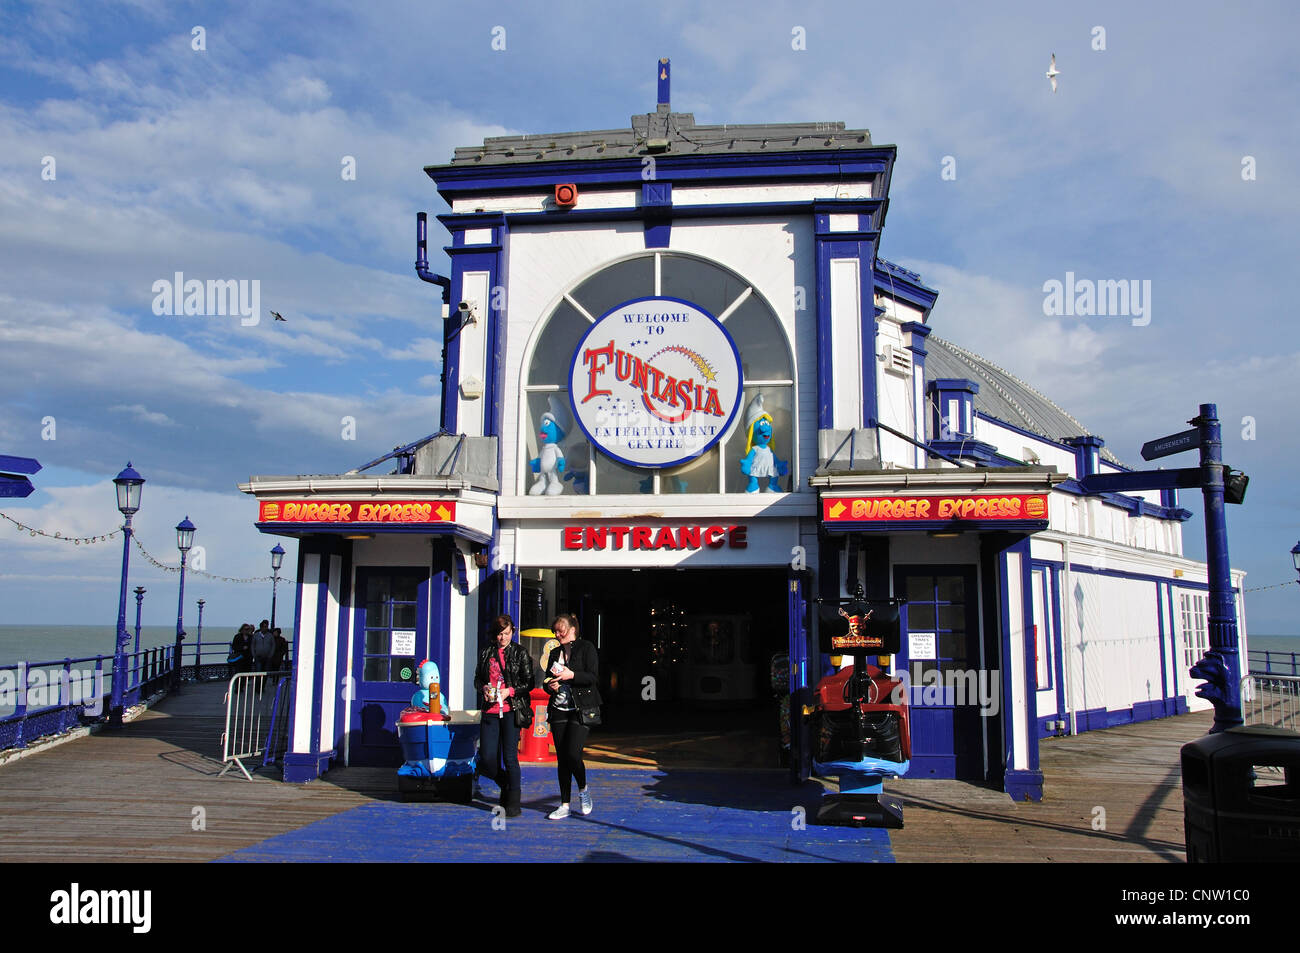 Funtasia entertainment centre, Eastbourne Pier, Eastbourne, East Sussex, England, United Kingdom Stock Photo